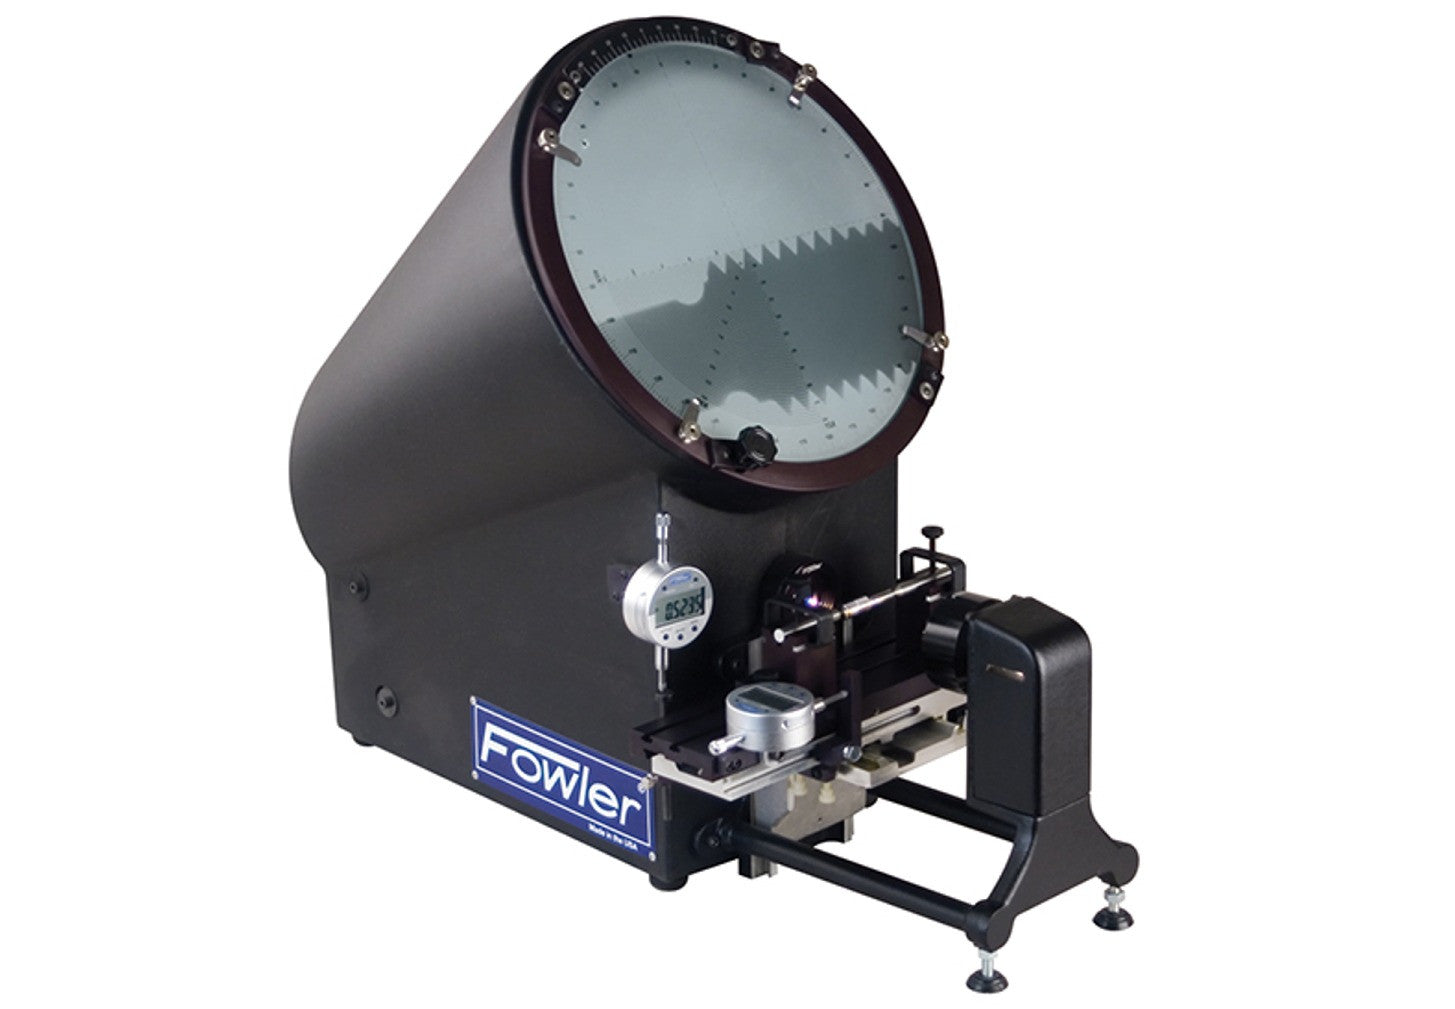 53-900-100 Fowler Optical Comparator